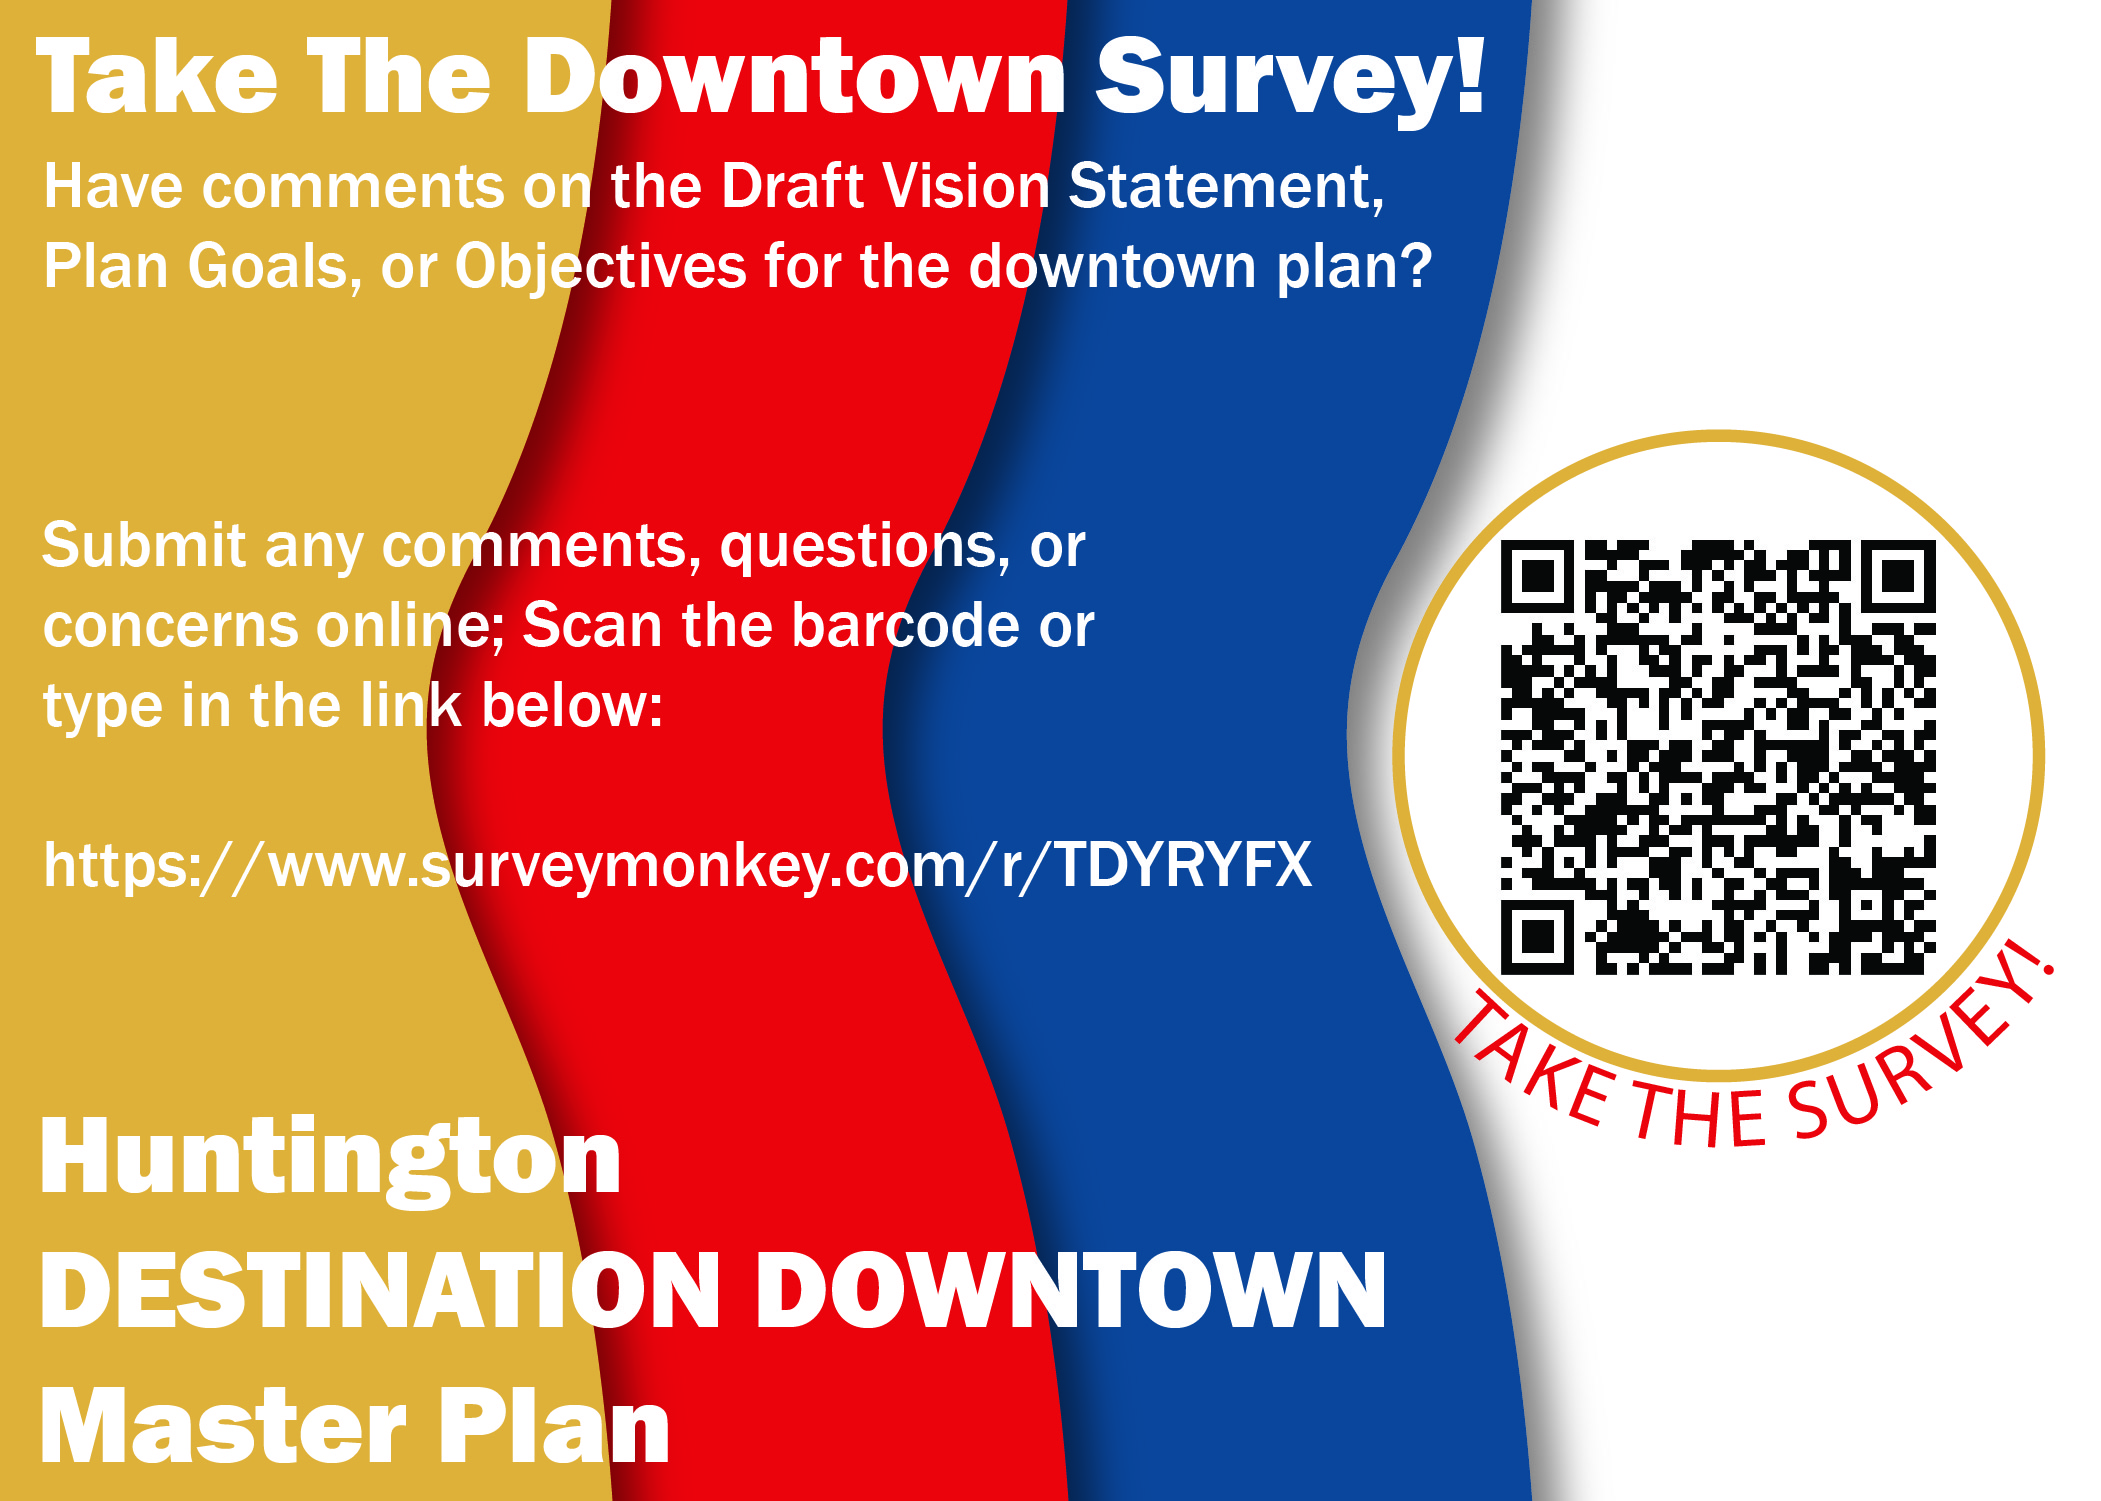 Downtown Master Plan Survey #2